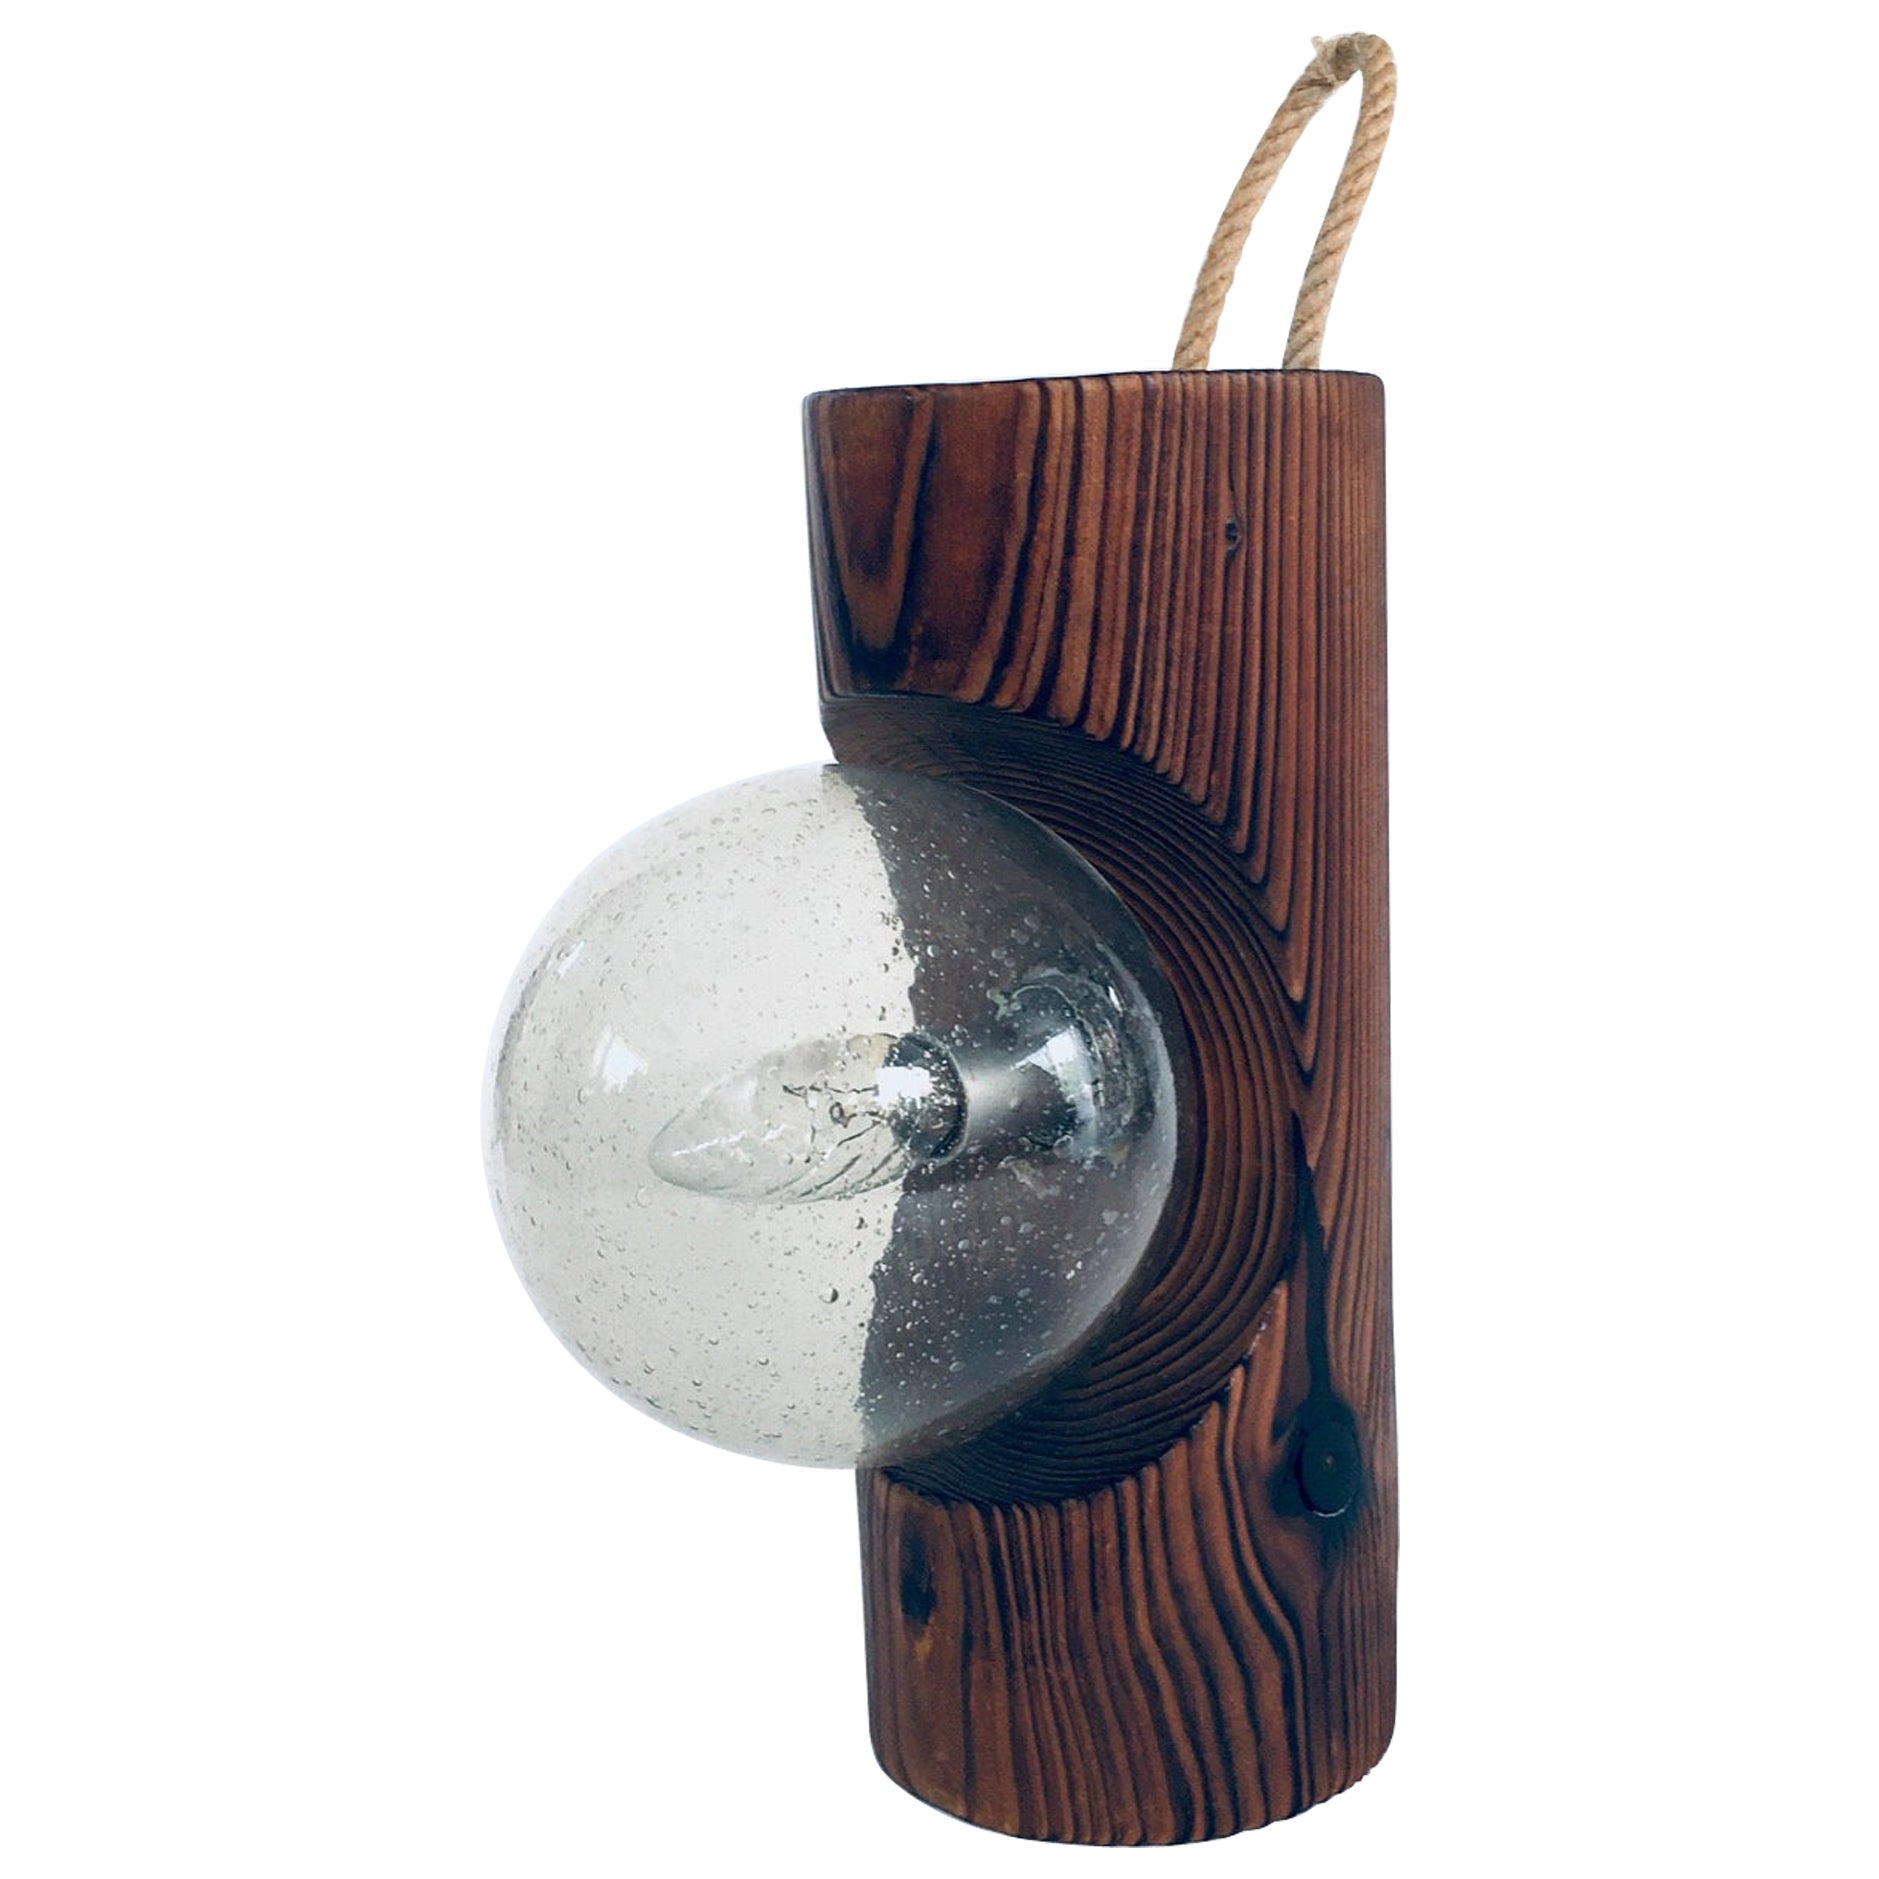 Brutalist Design Wood Table or Wall Lamp by Temde Leuchten, Switzerland 1960's For Sale